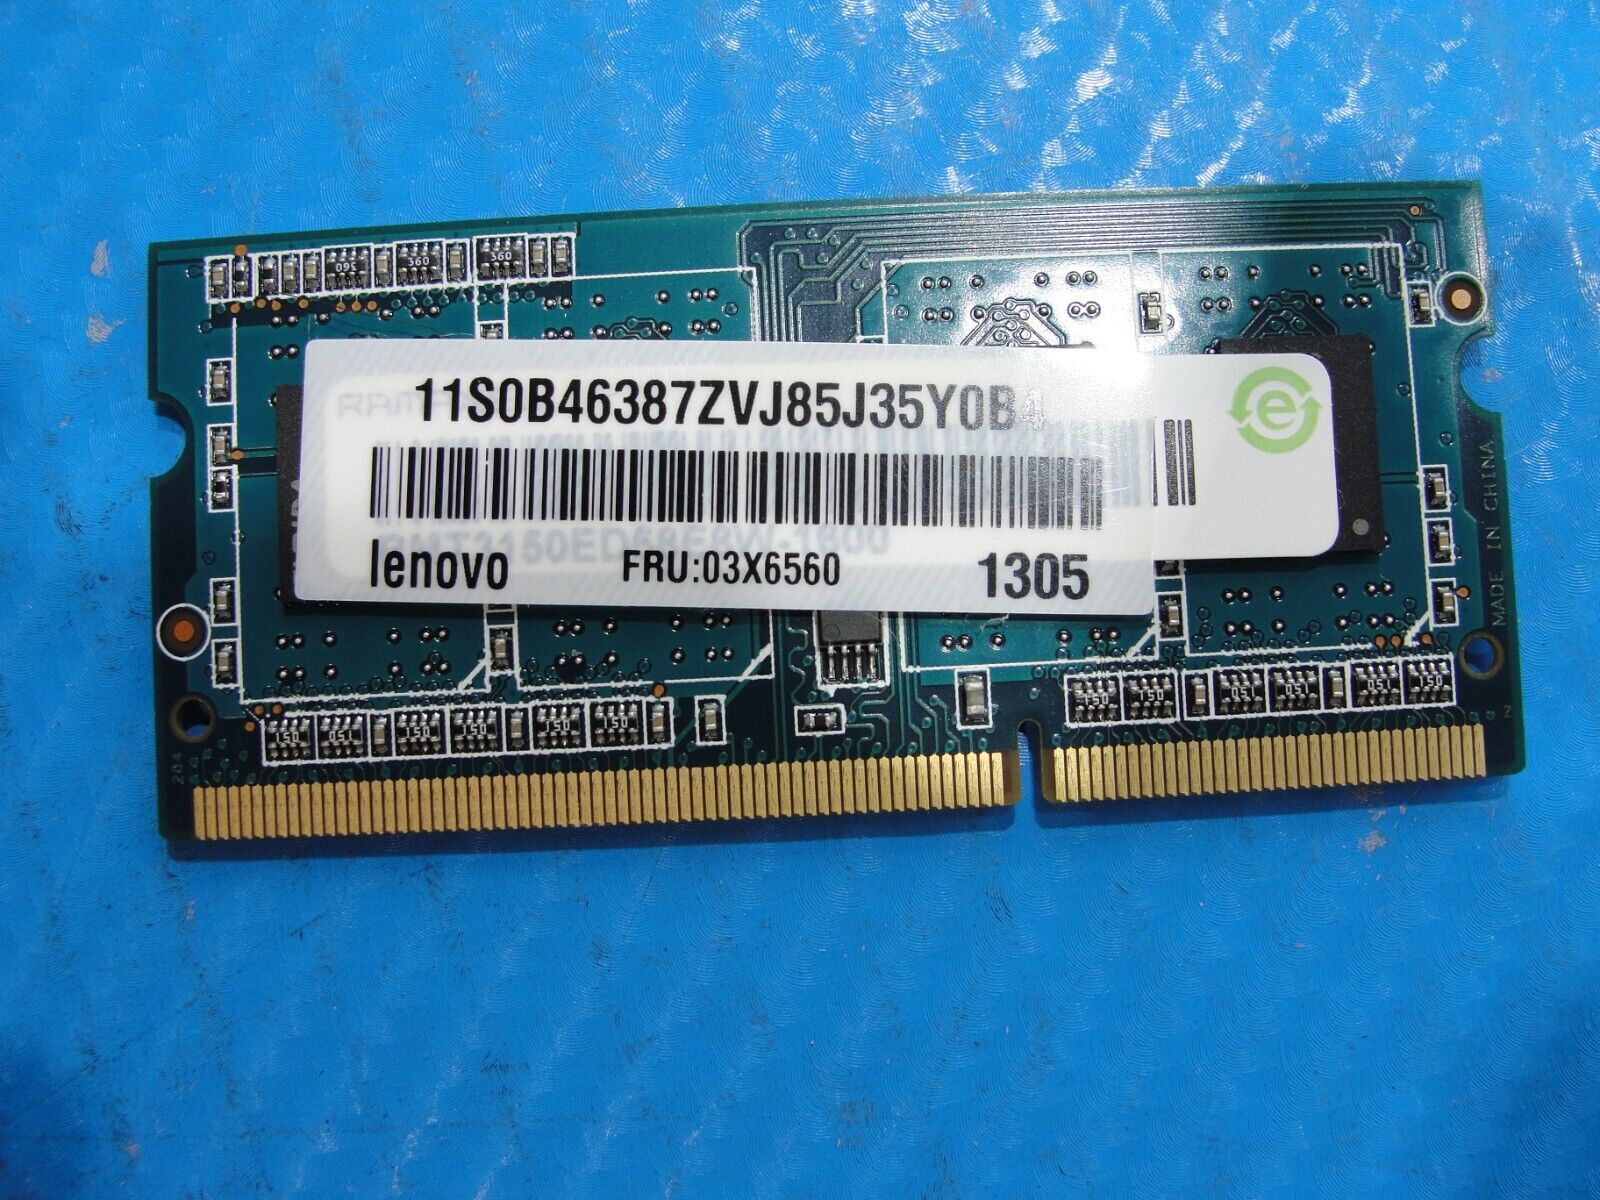 Lenovo T530 Ramaxel 2GB 1Rx8 PC3-12800S SO-DIMM Memory RAM RMT3150ED58E8W-1600